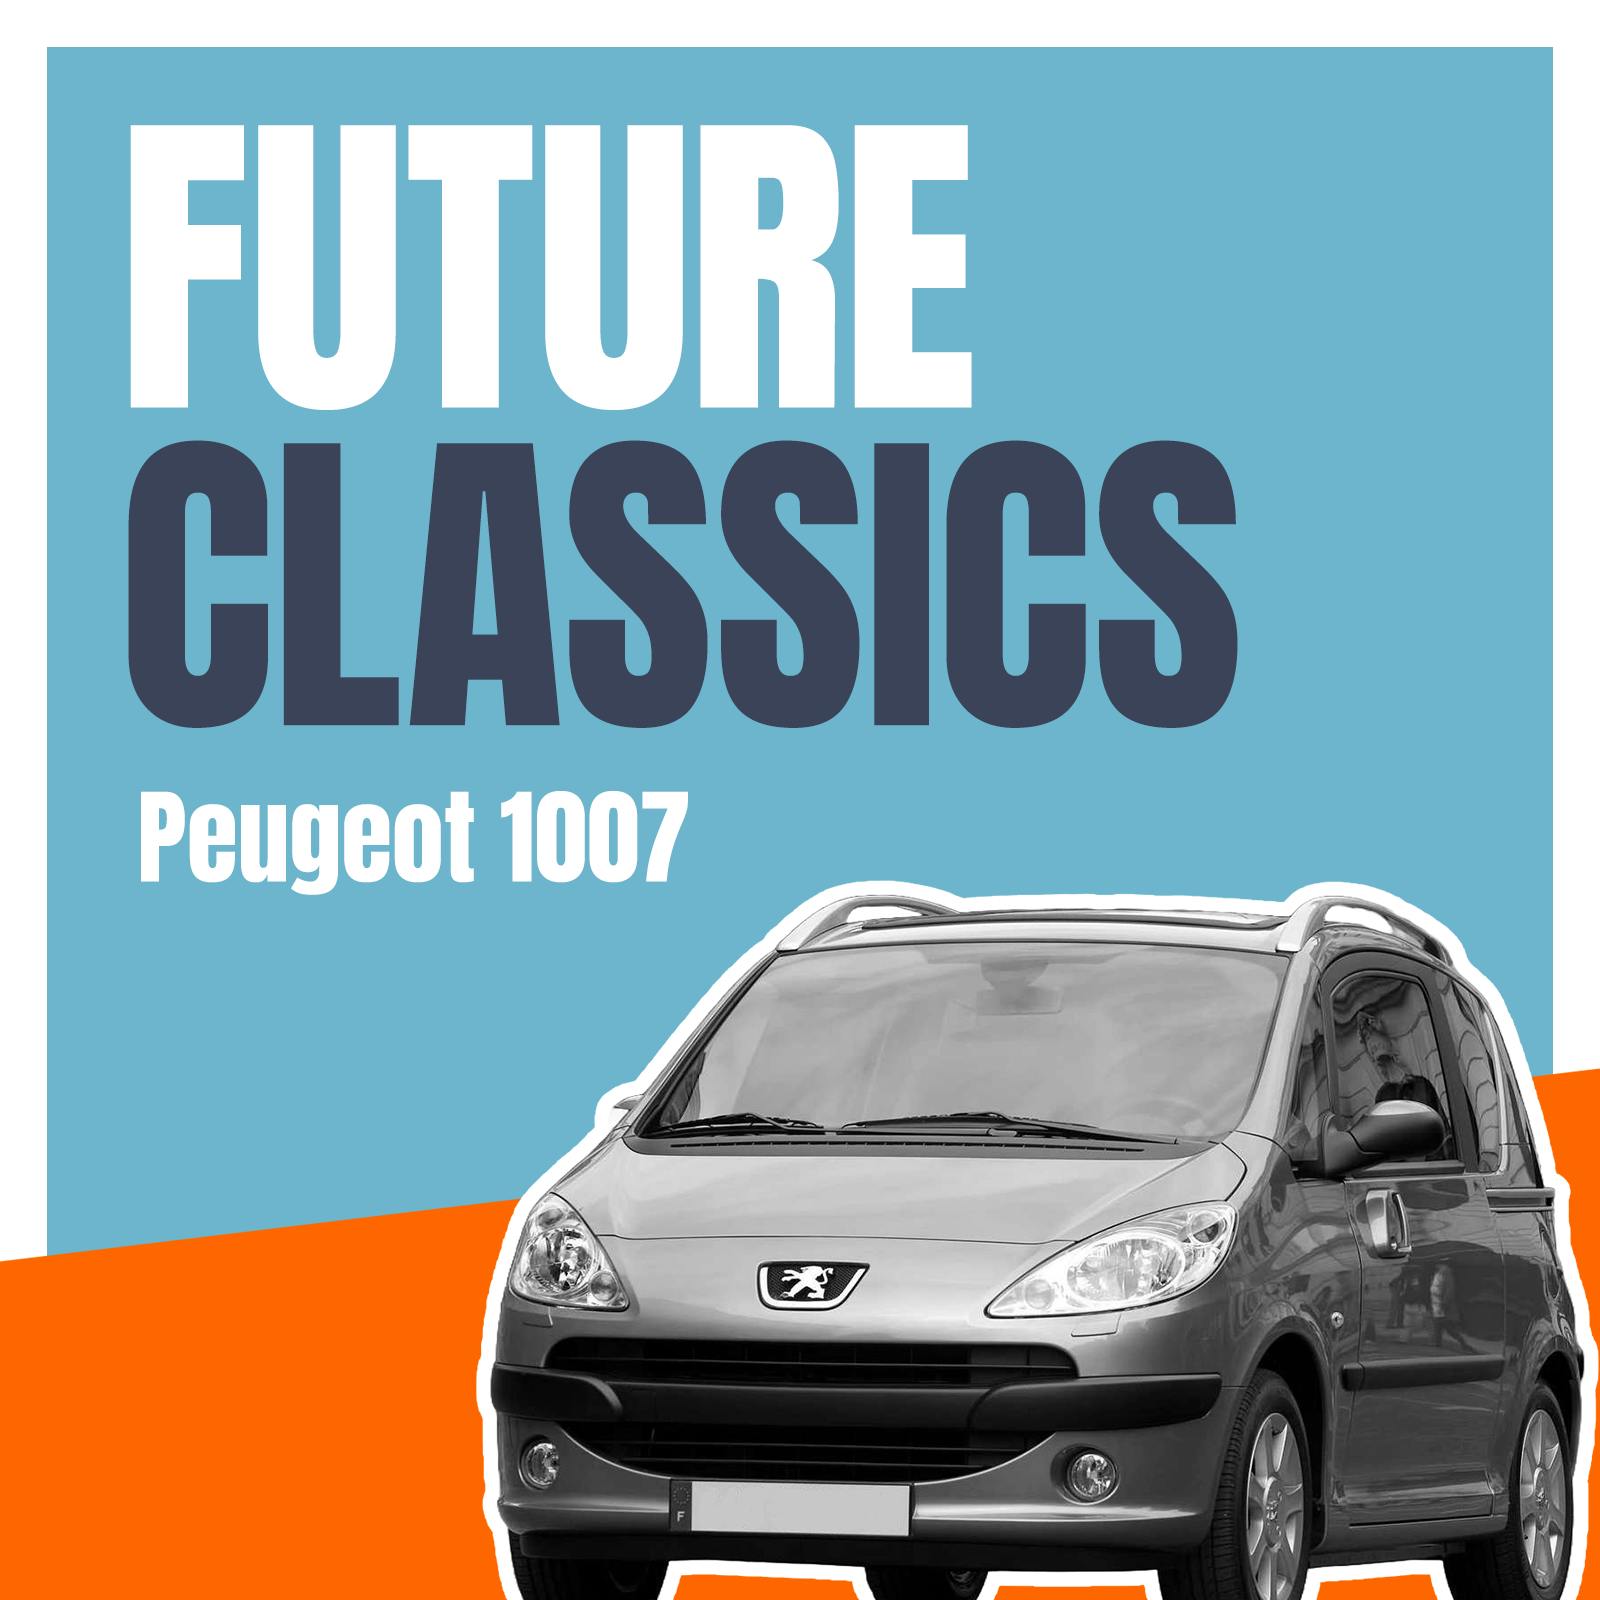 Peugeot 1007 – Folge 28